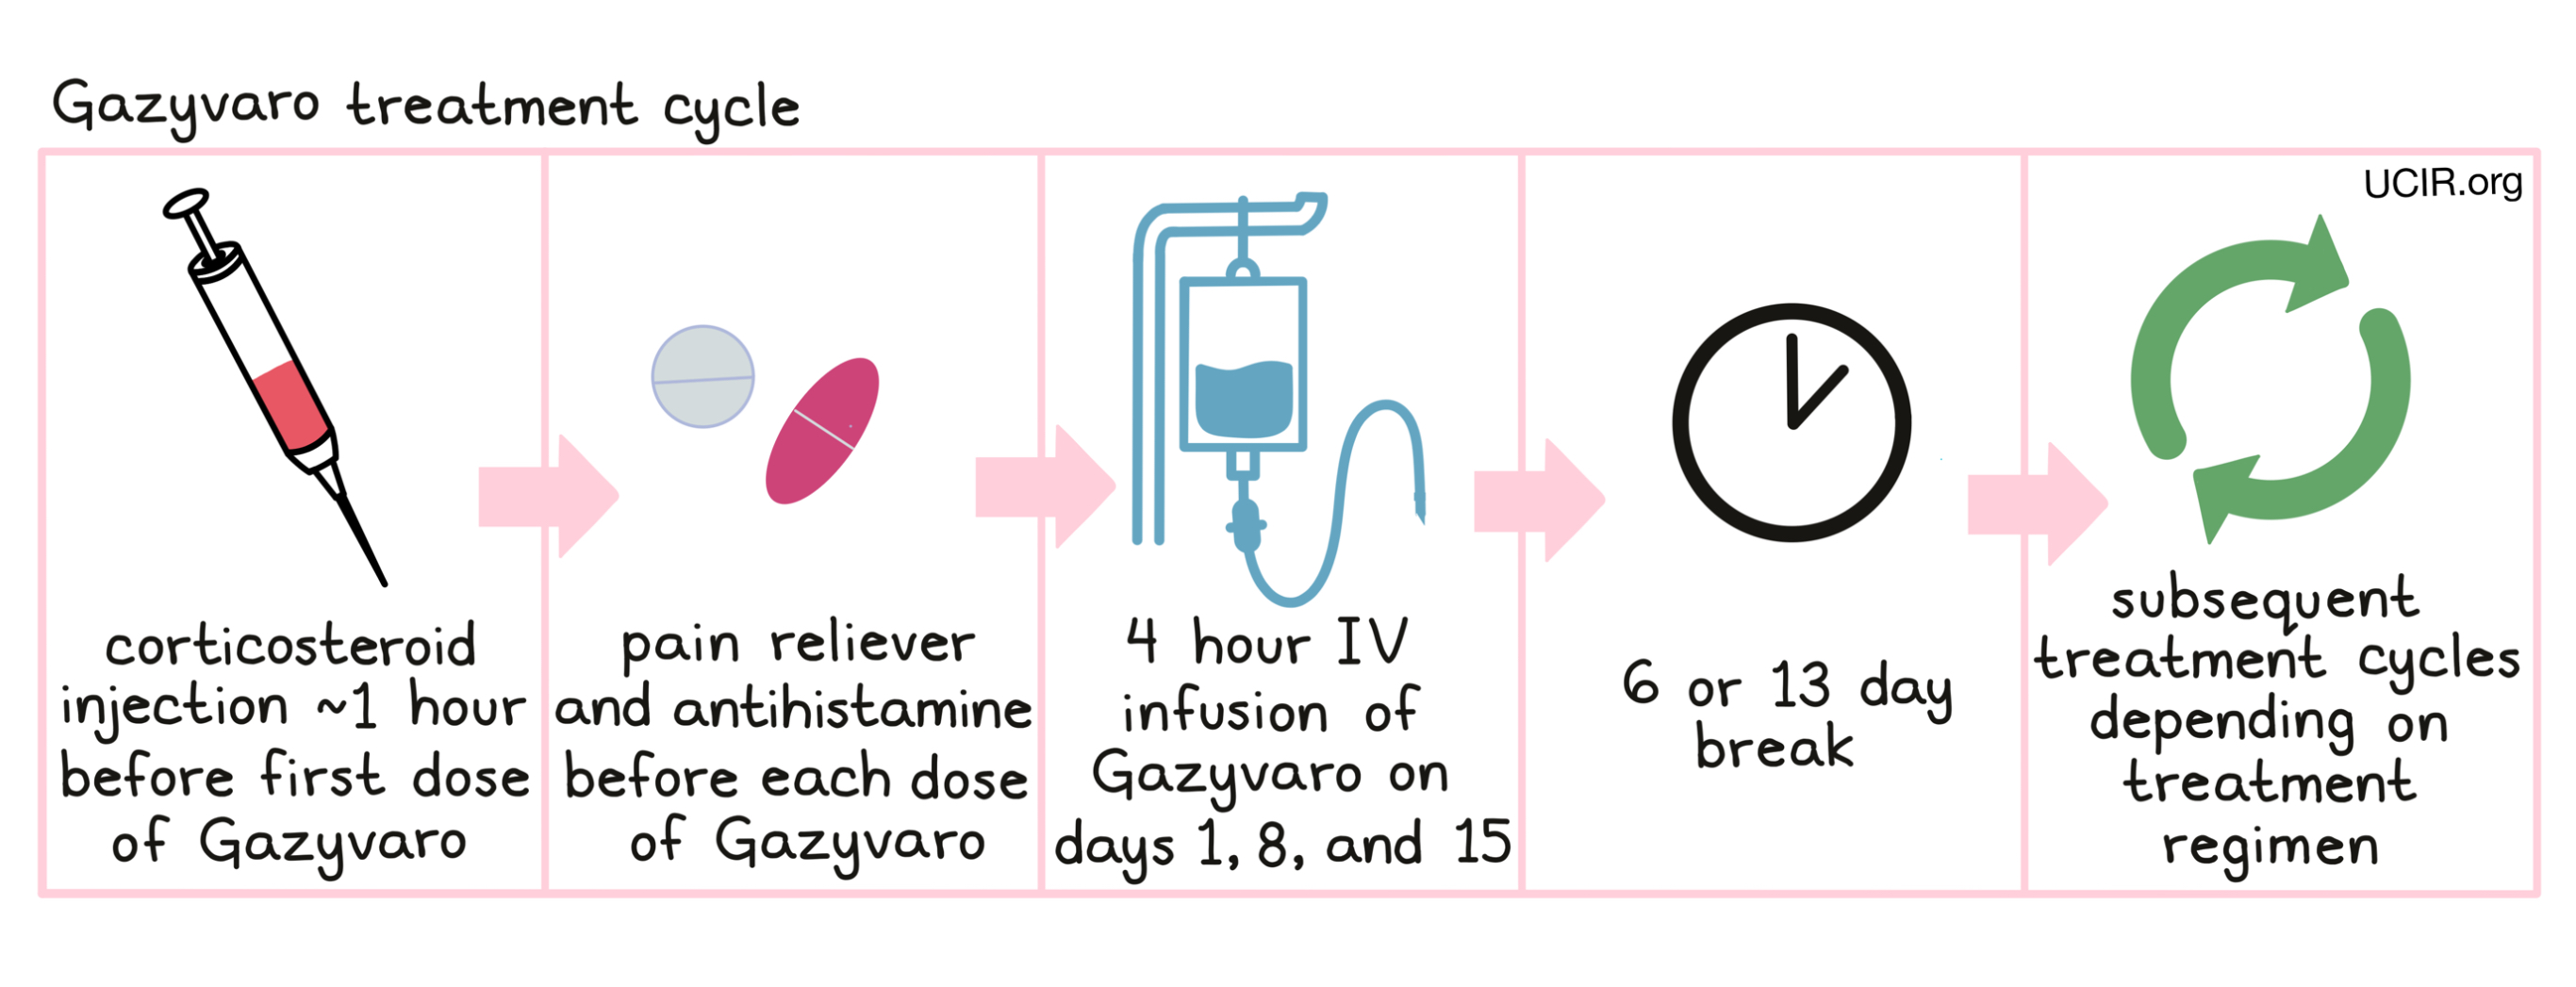 Illustration showing Gazyvaro treatment cycle